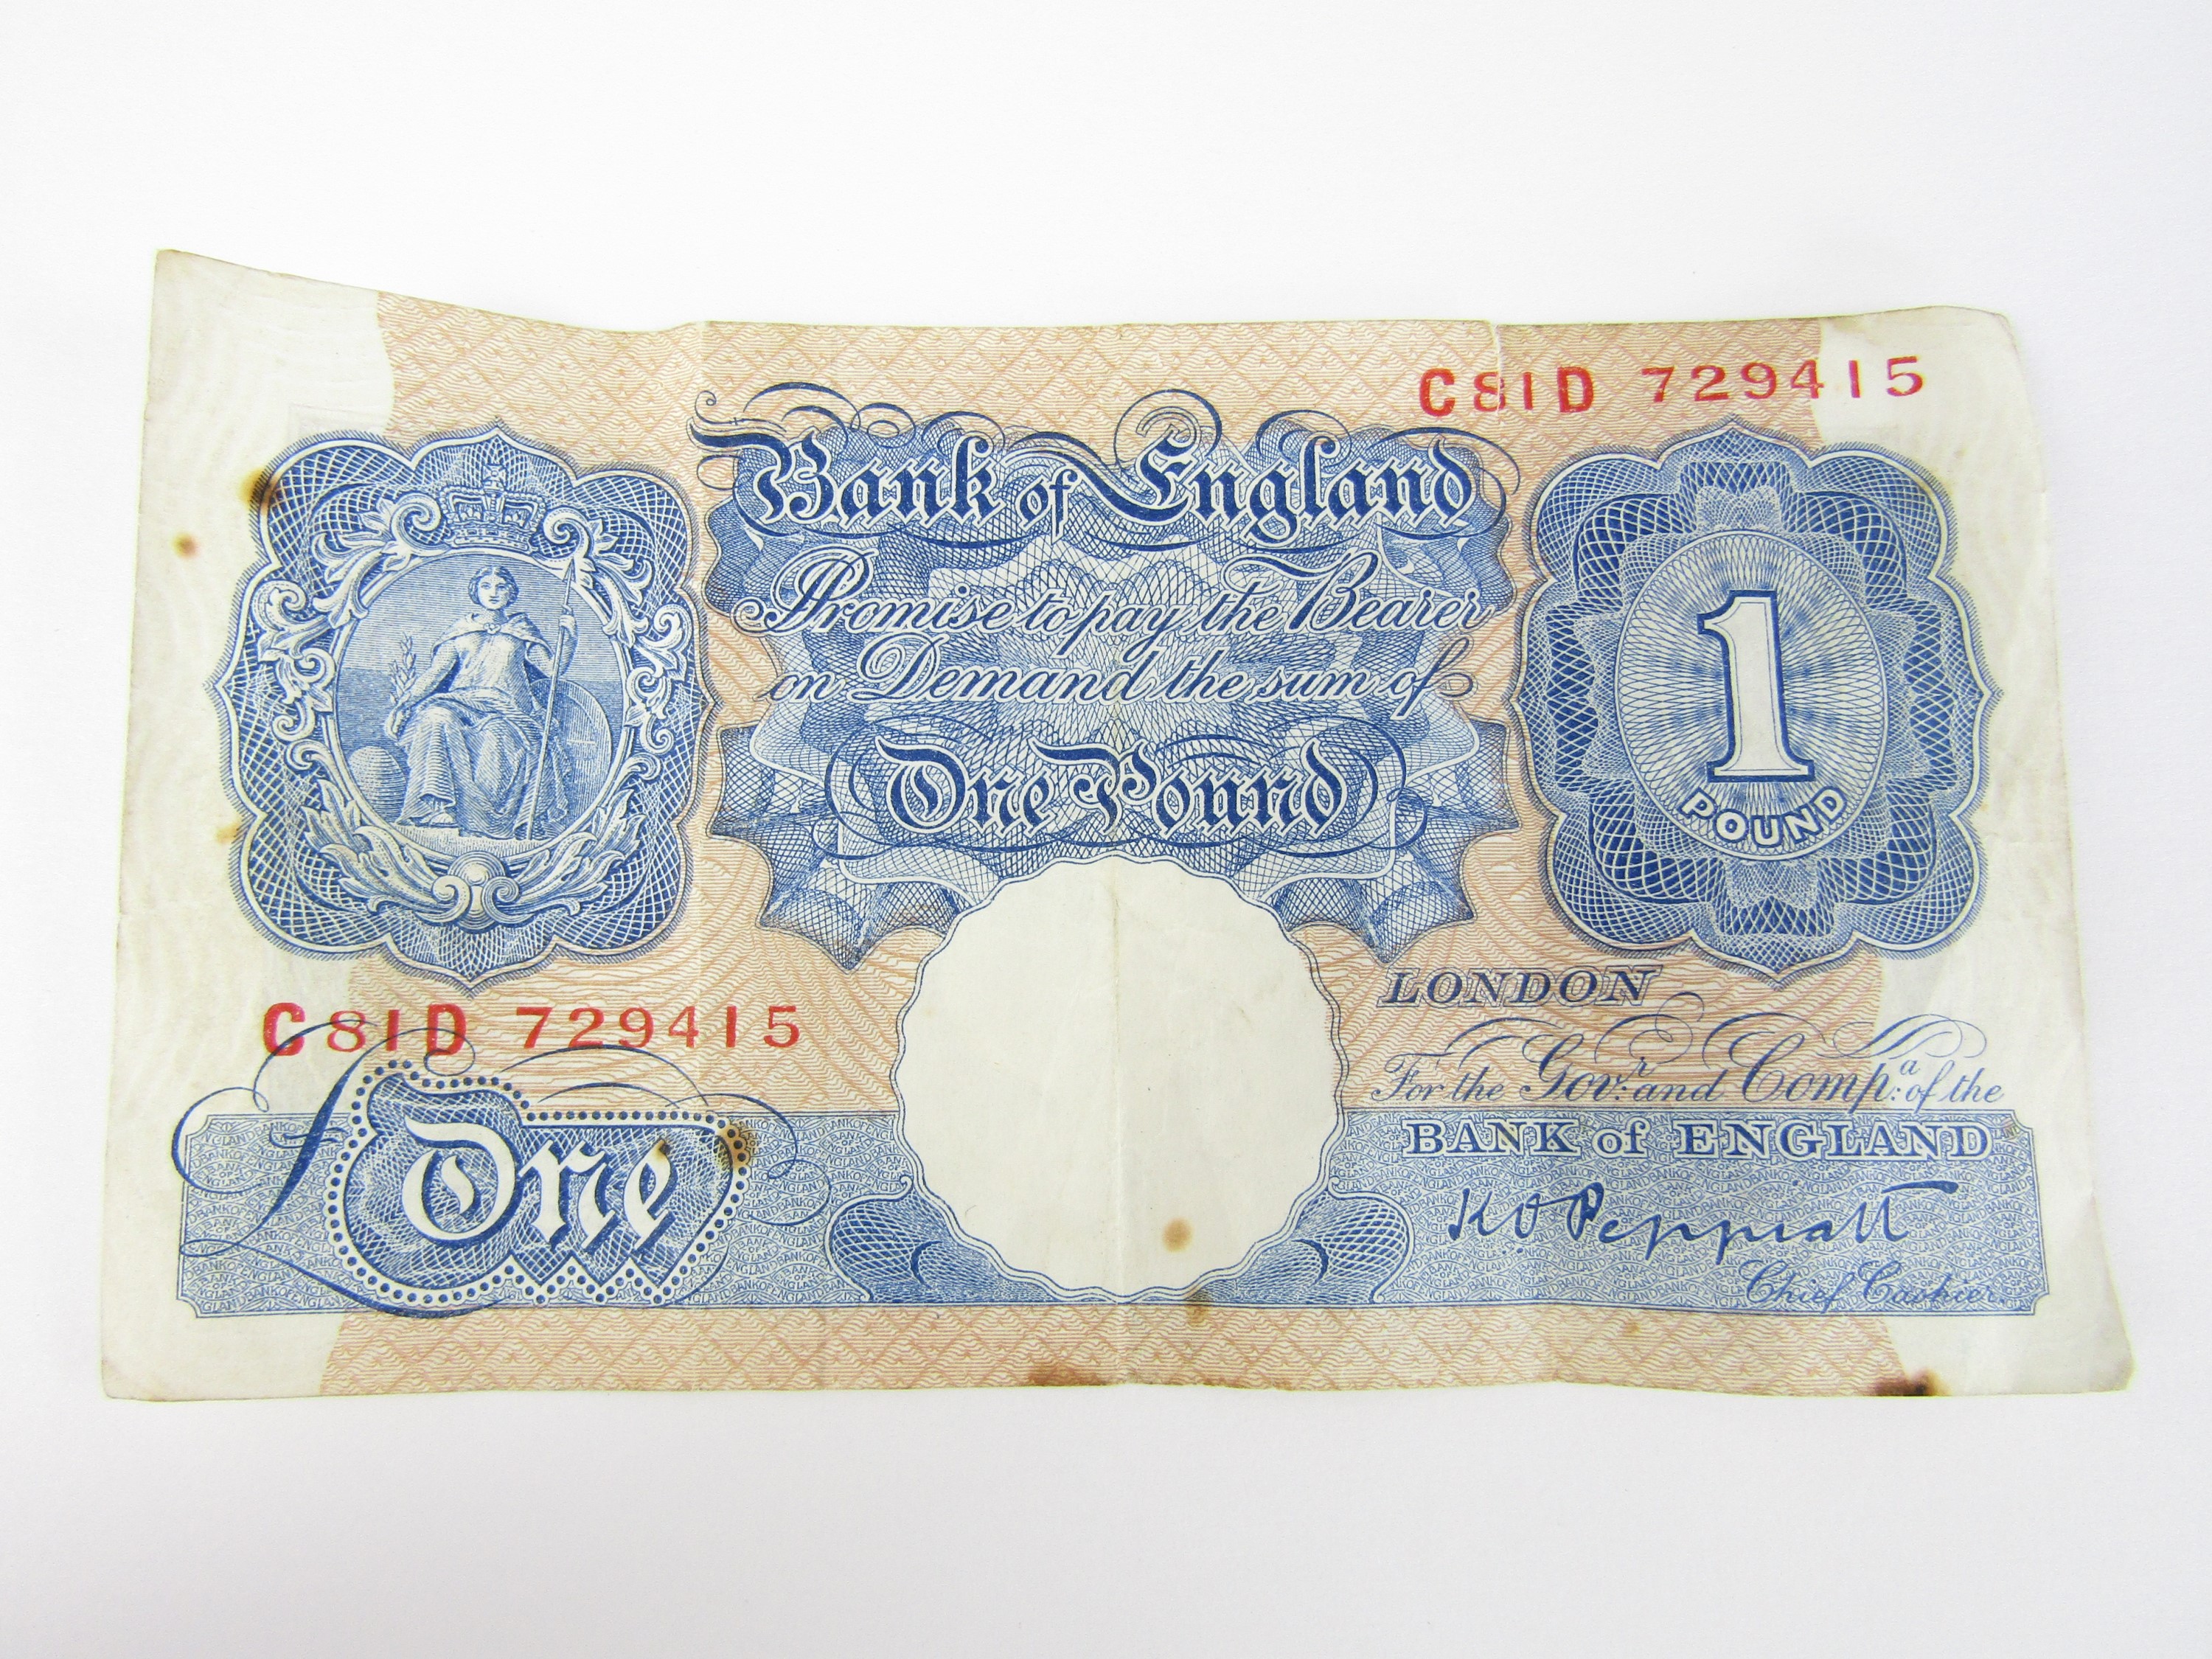 A Peppiatt Bank of England one pound note